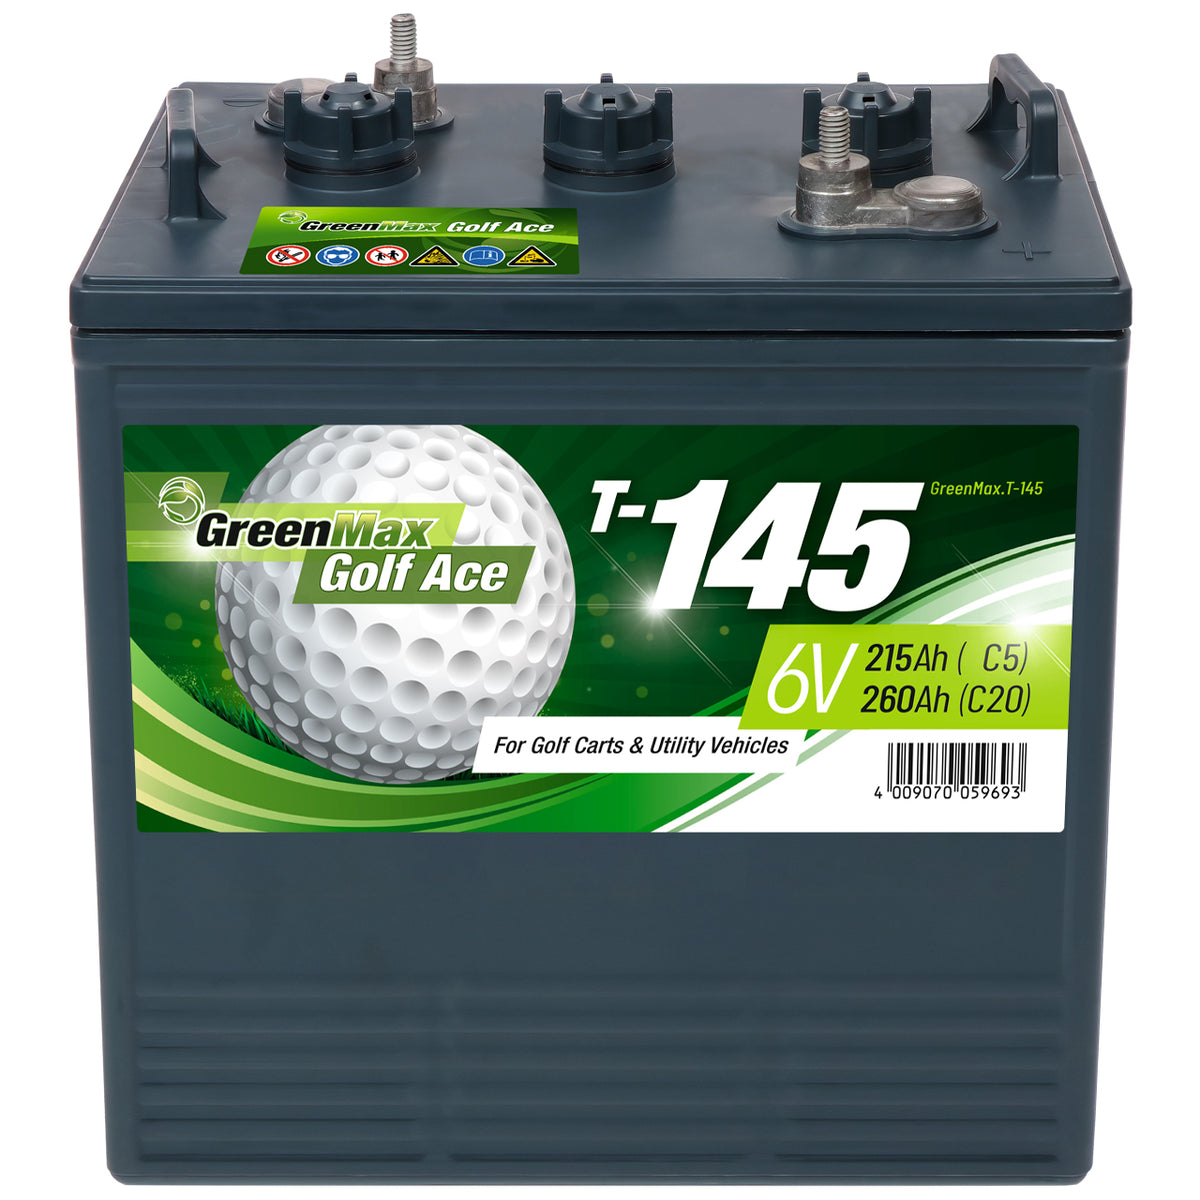 GreenMax Golf Ace T-145  6V 260Ah